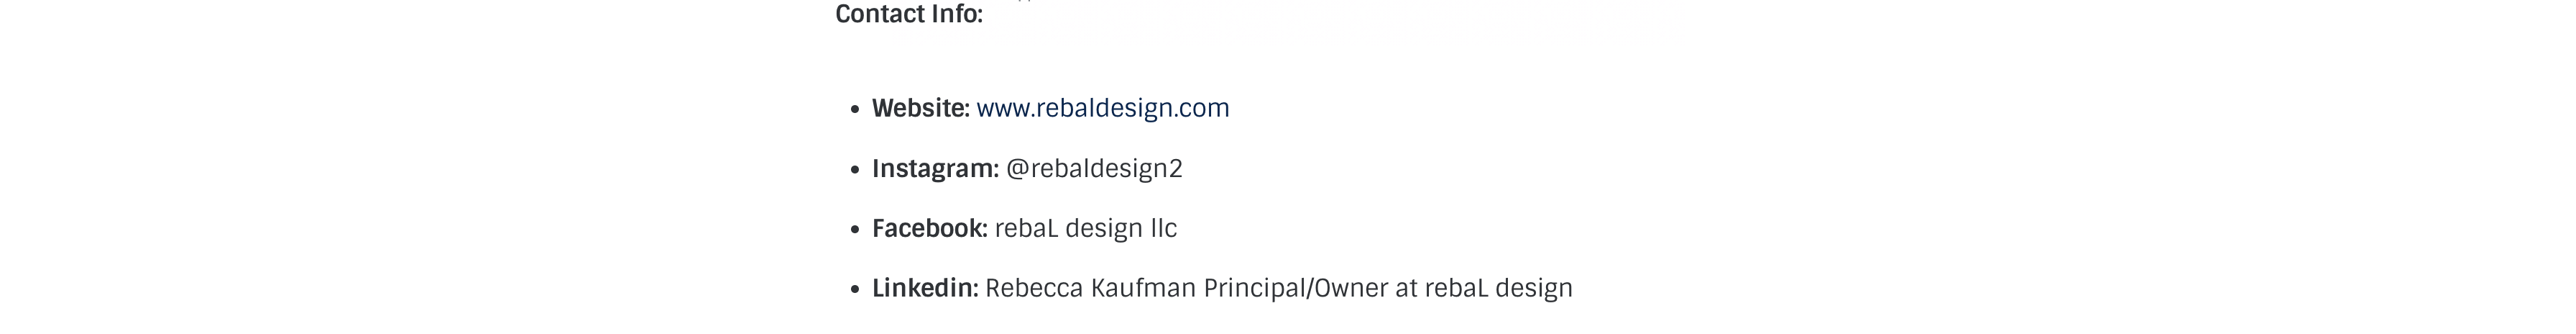 Image of contact information for interior design studio rebaL design